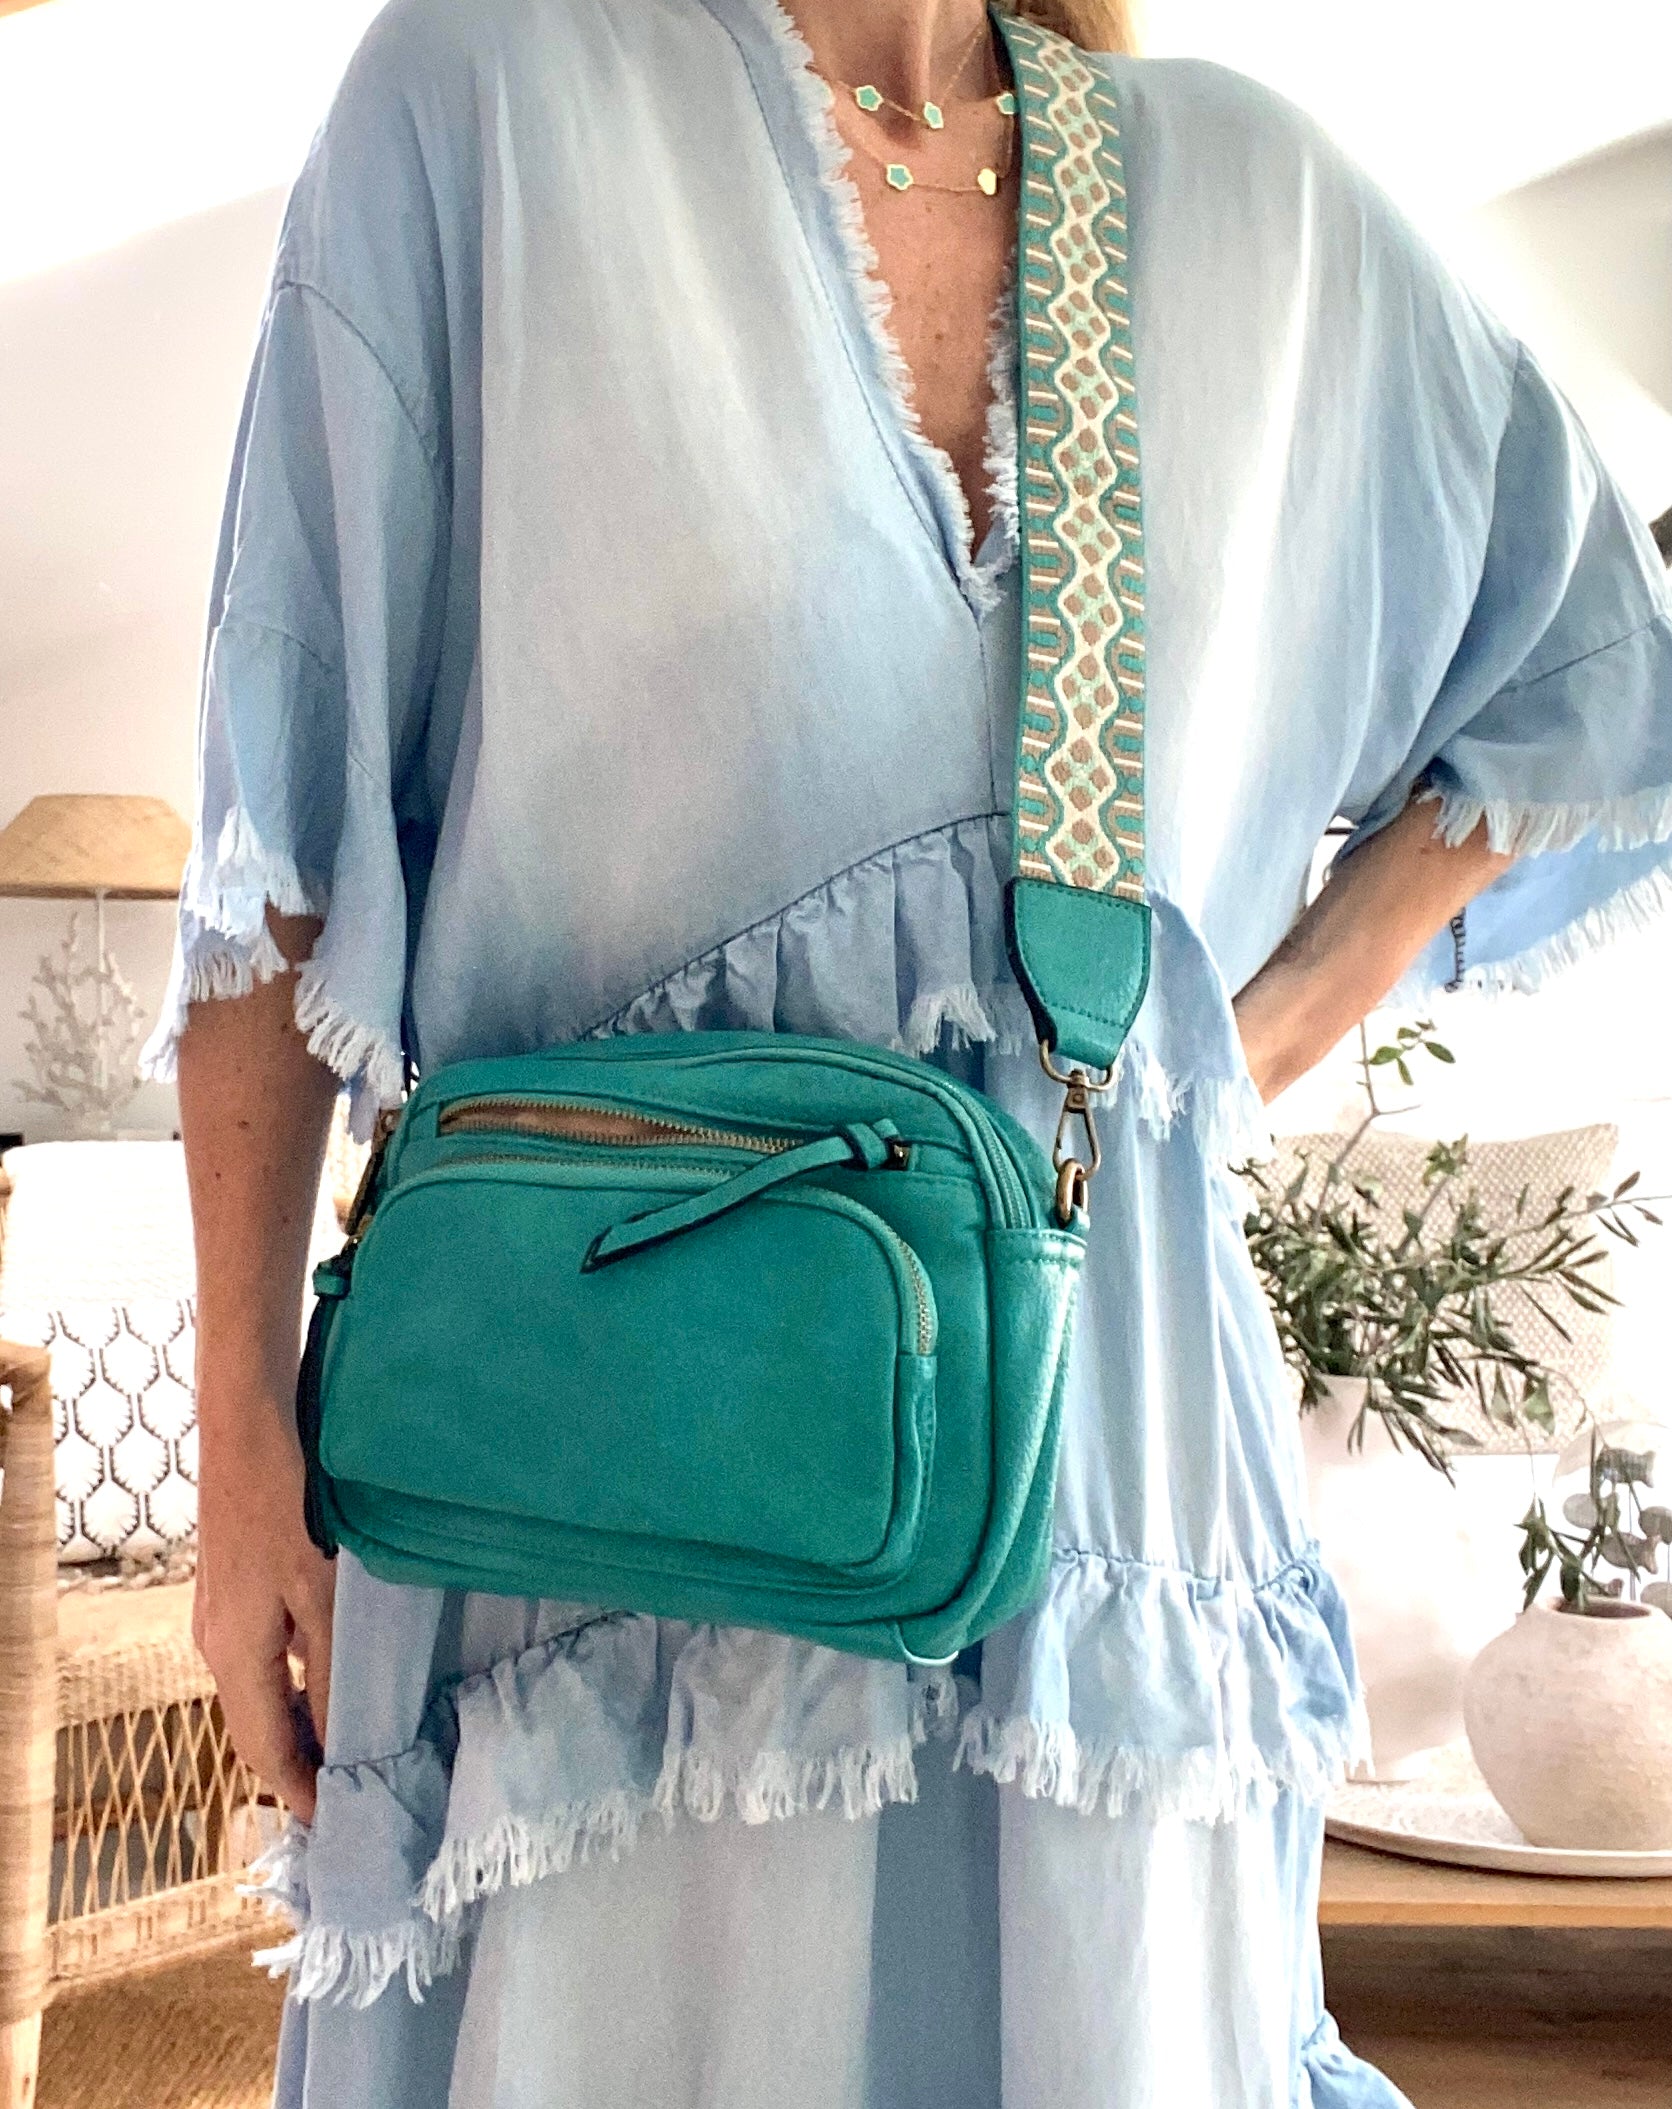 PALMA turquoise shoulder bag